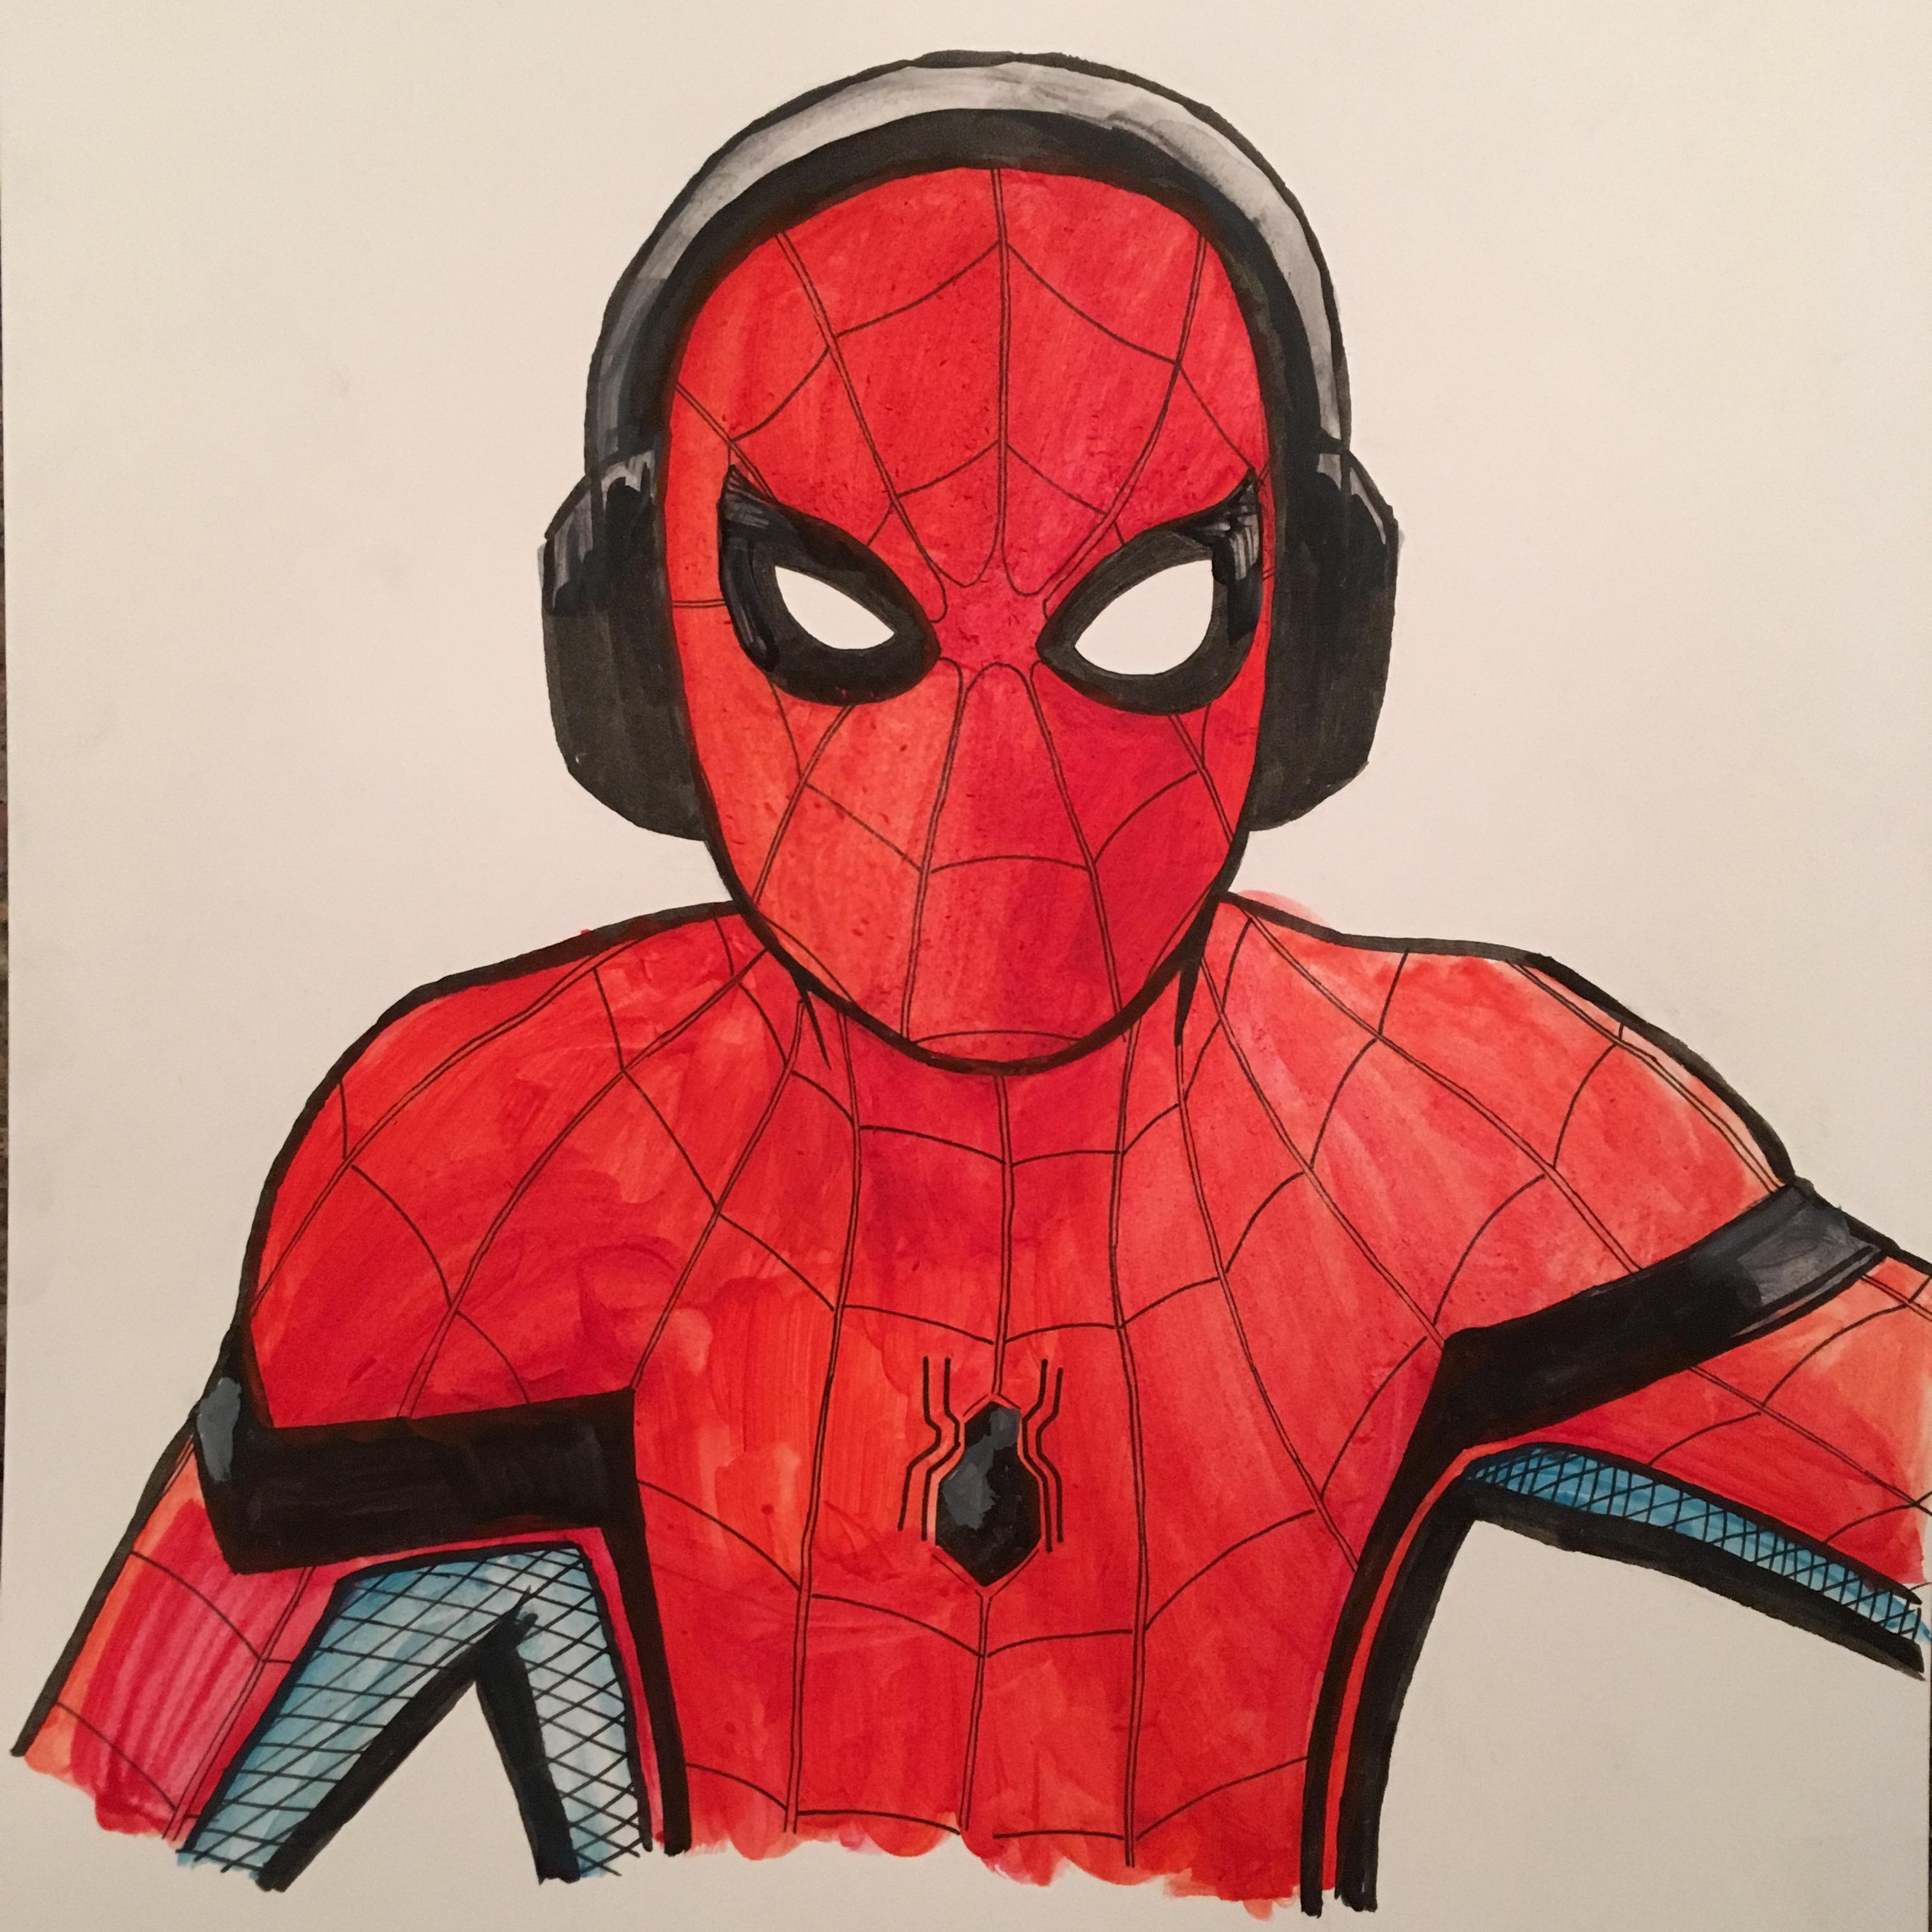 Spider Man Drawing at Explore